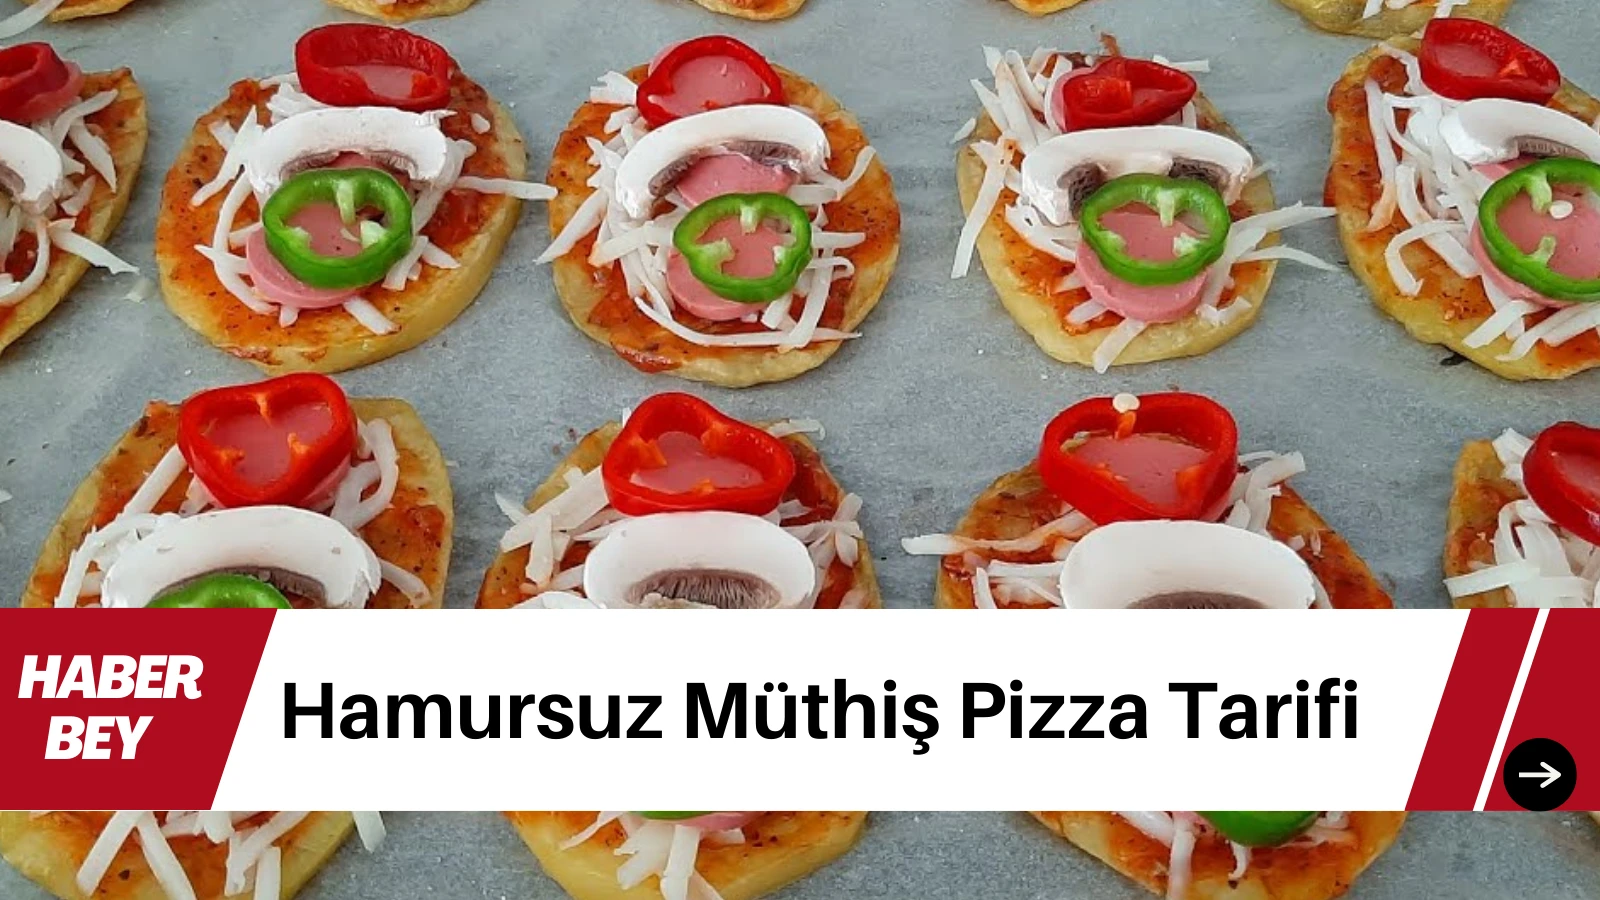 Hamursuz Müthiş Pizza Tarifi